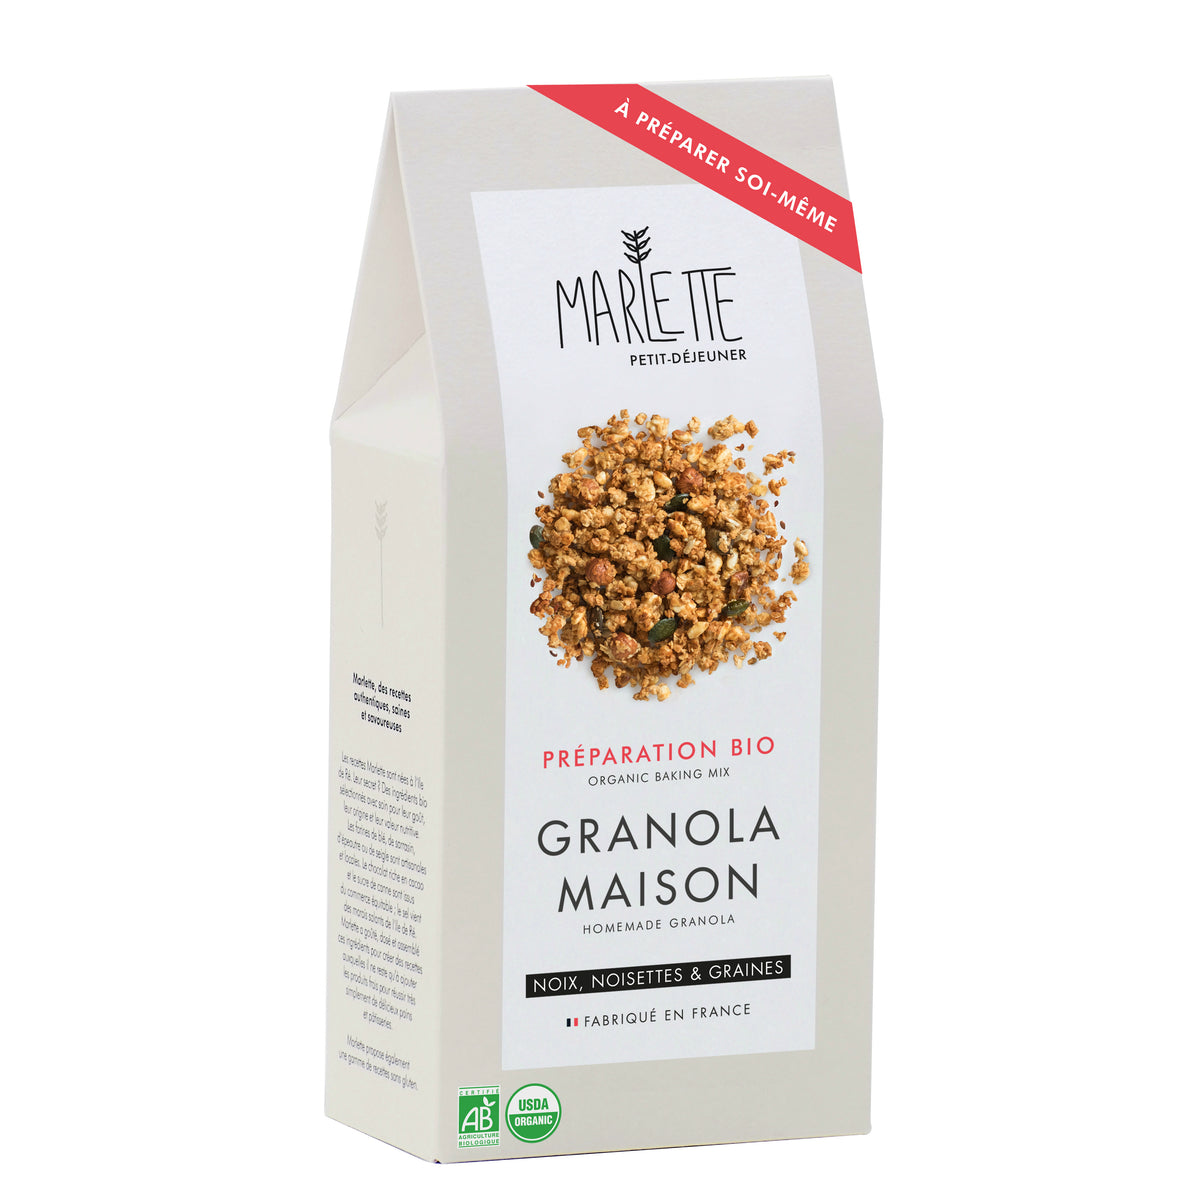 Homemade granola - organic baking mix